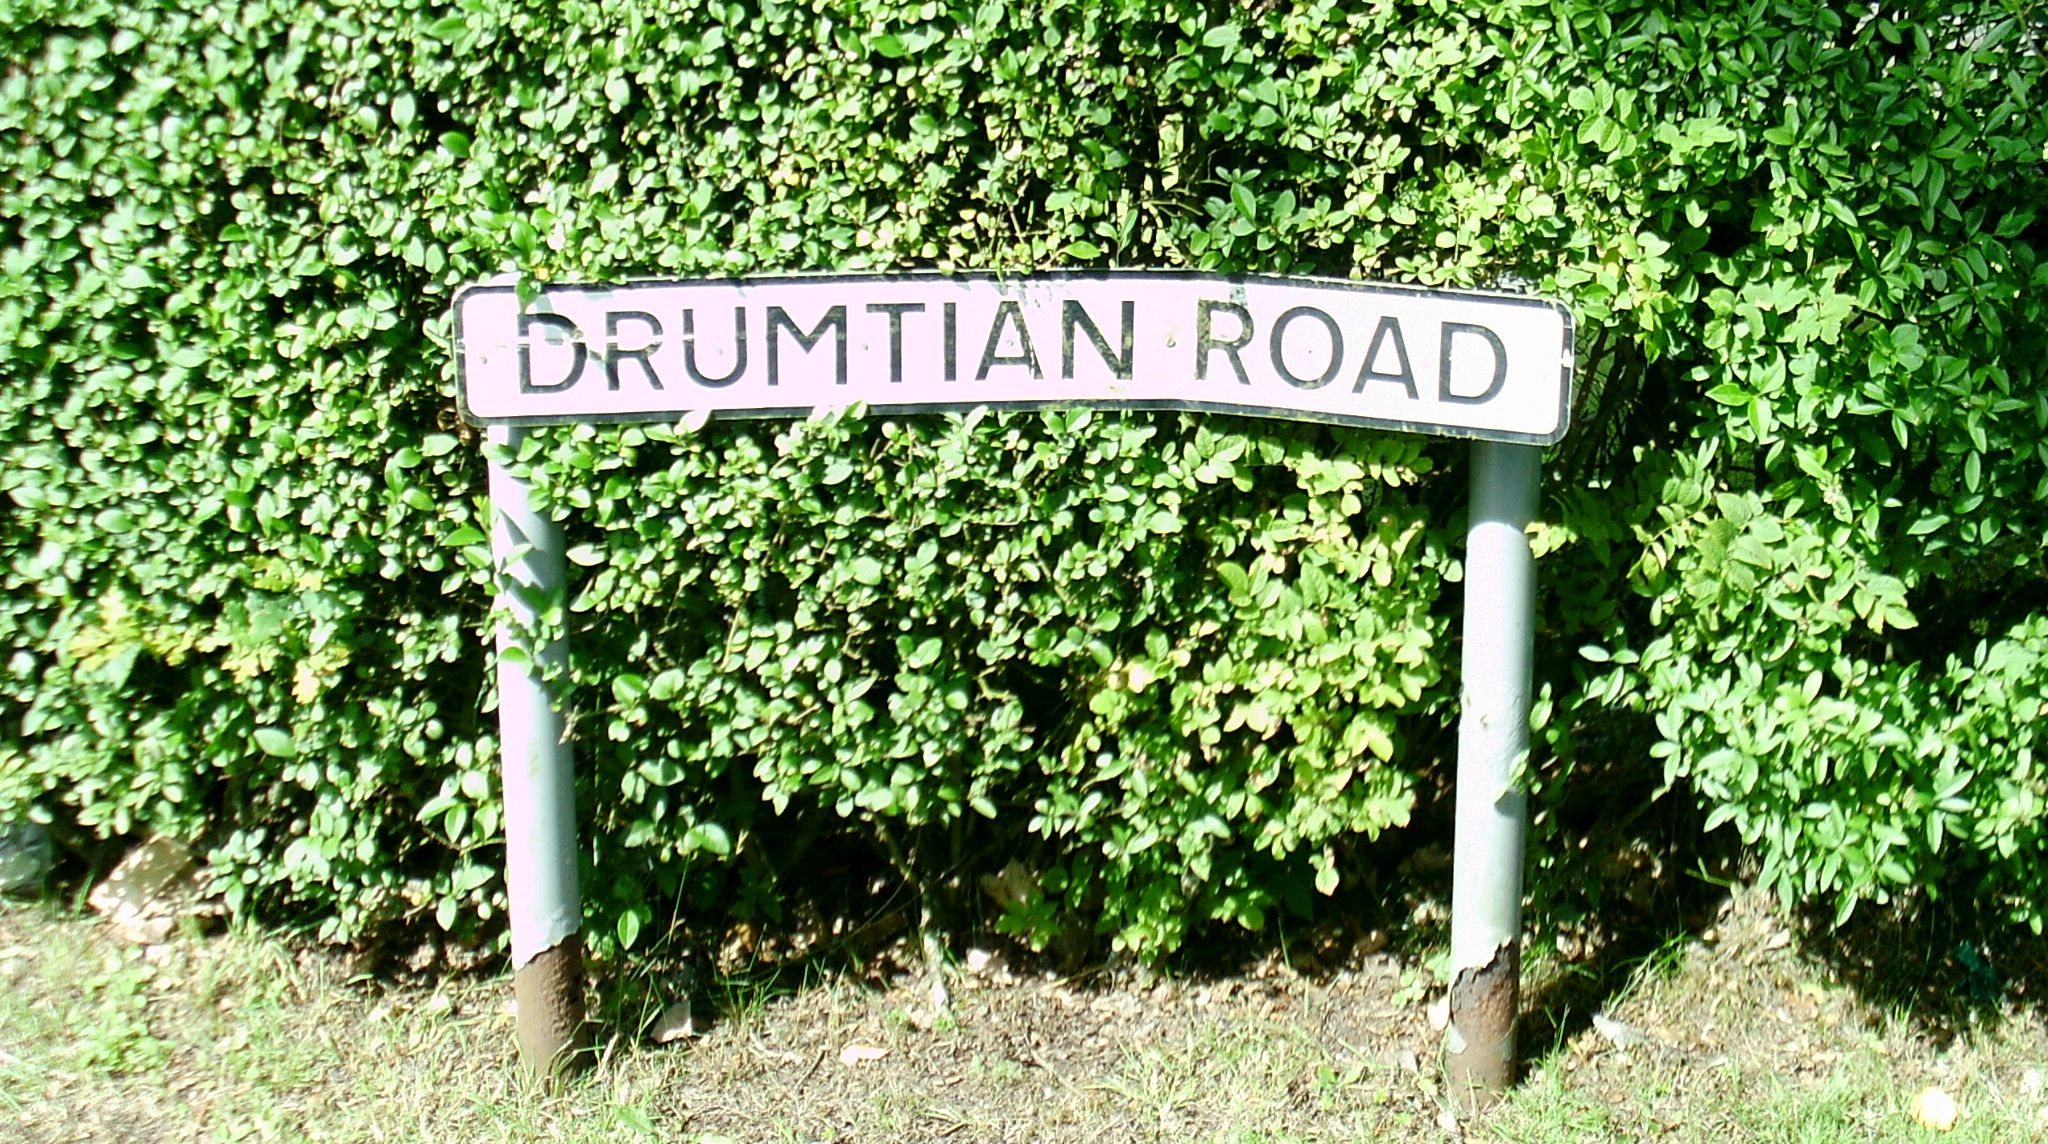 Drumtian Road